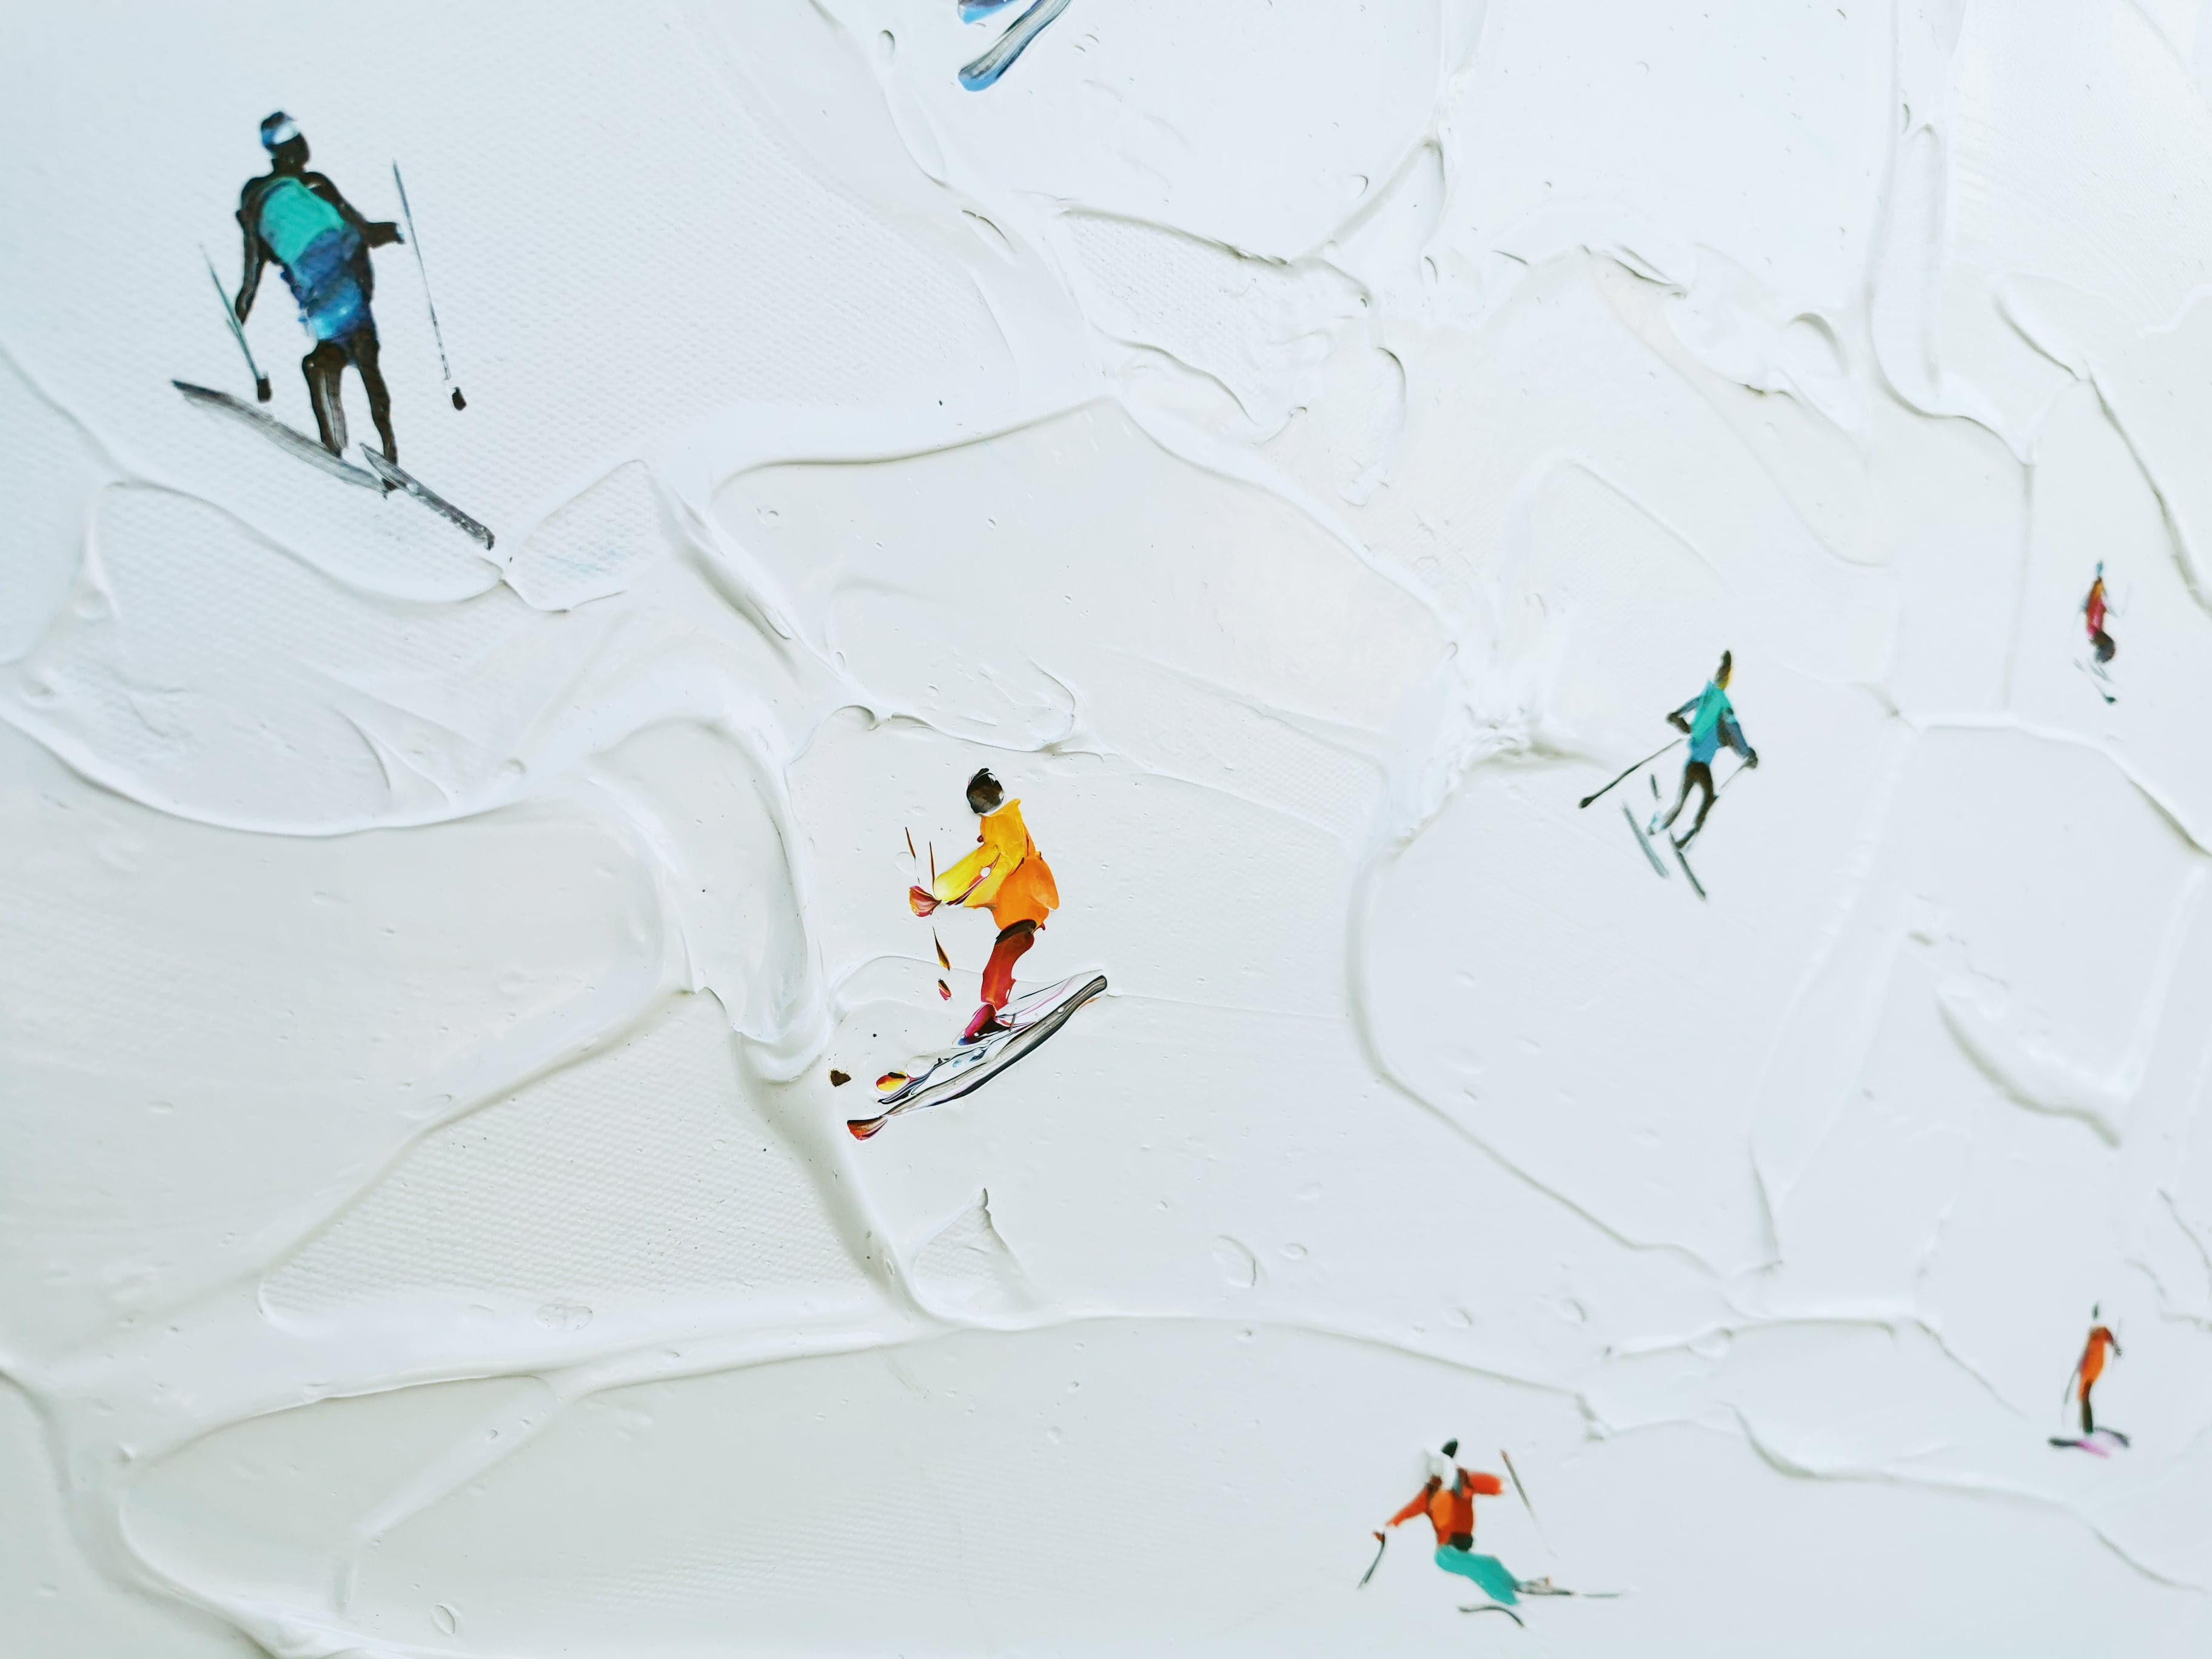 Framed 1 Panel - Oil Painting - Snowboarding